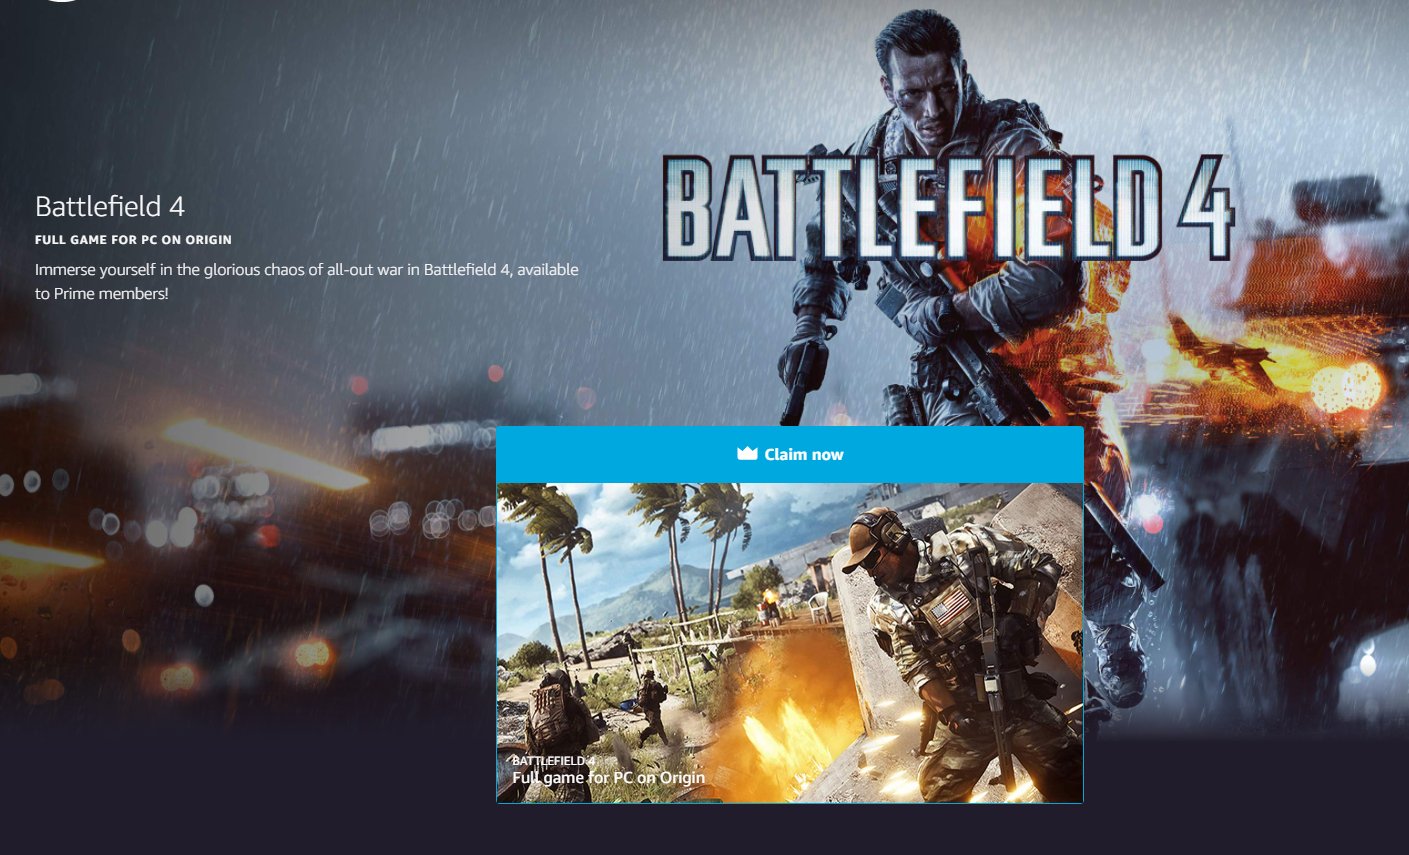 Wario64 Battlefield 4 Pc Origin Is Free On Prime Gaming T Co Koxytvjpae T Co Yffmusnnty Twitter